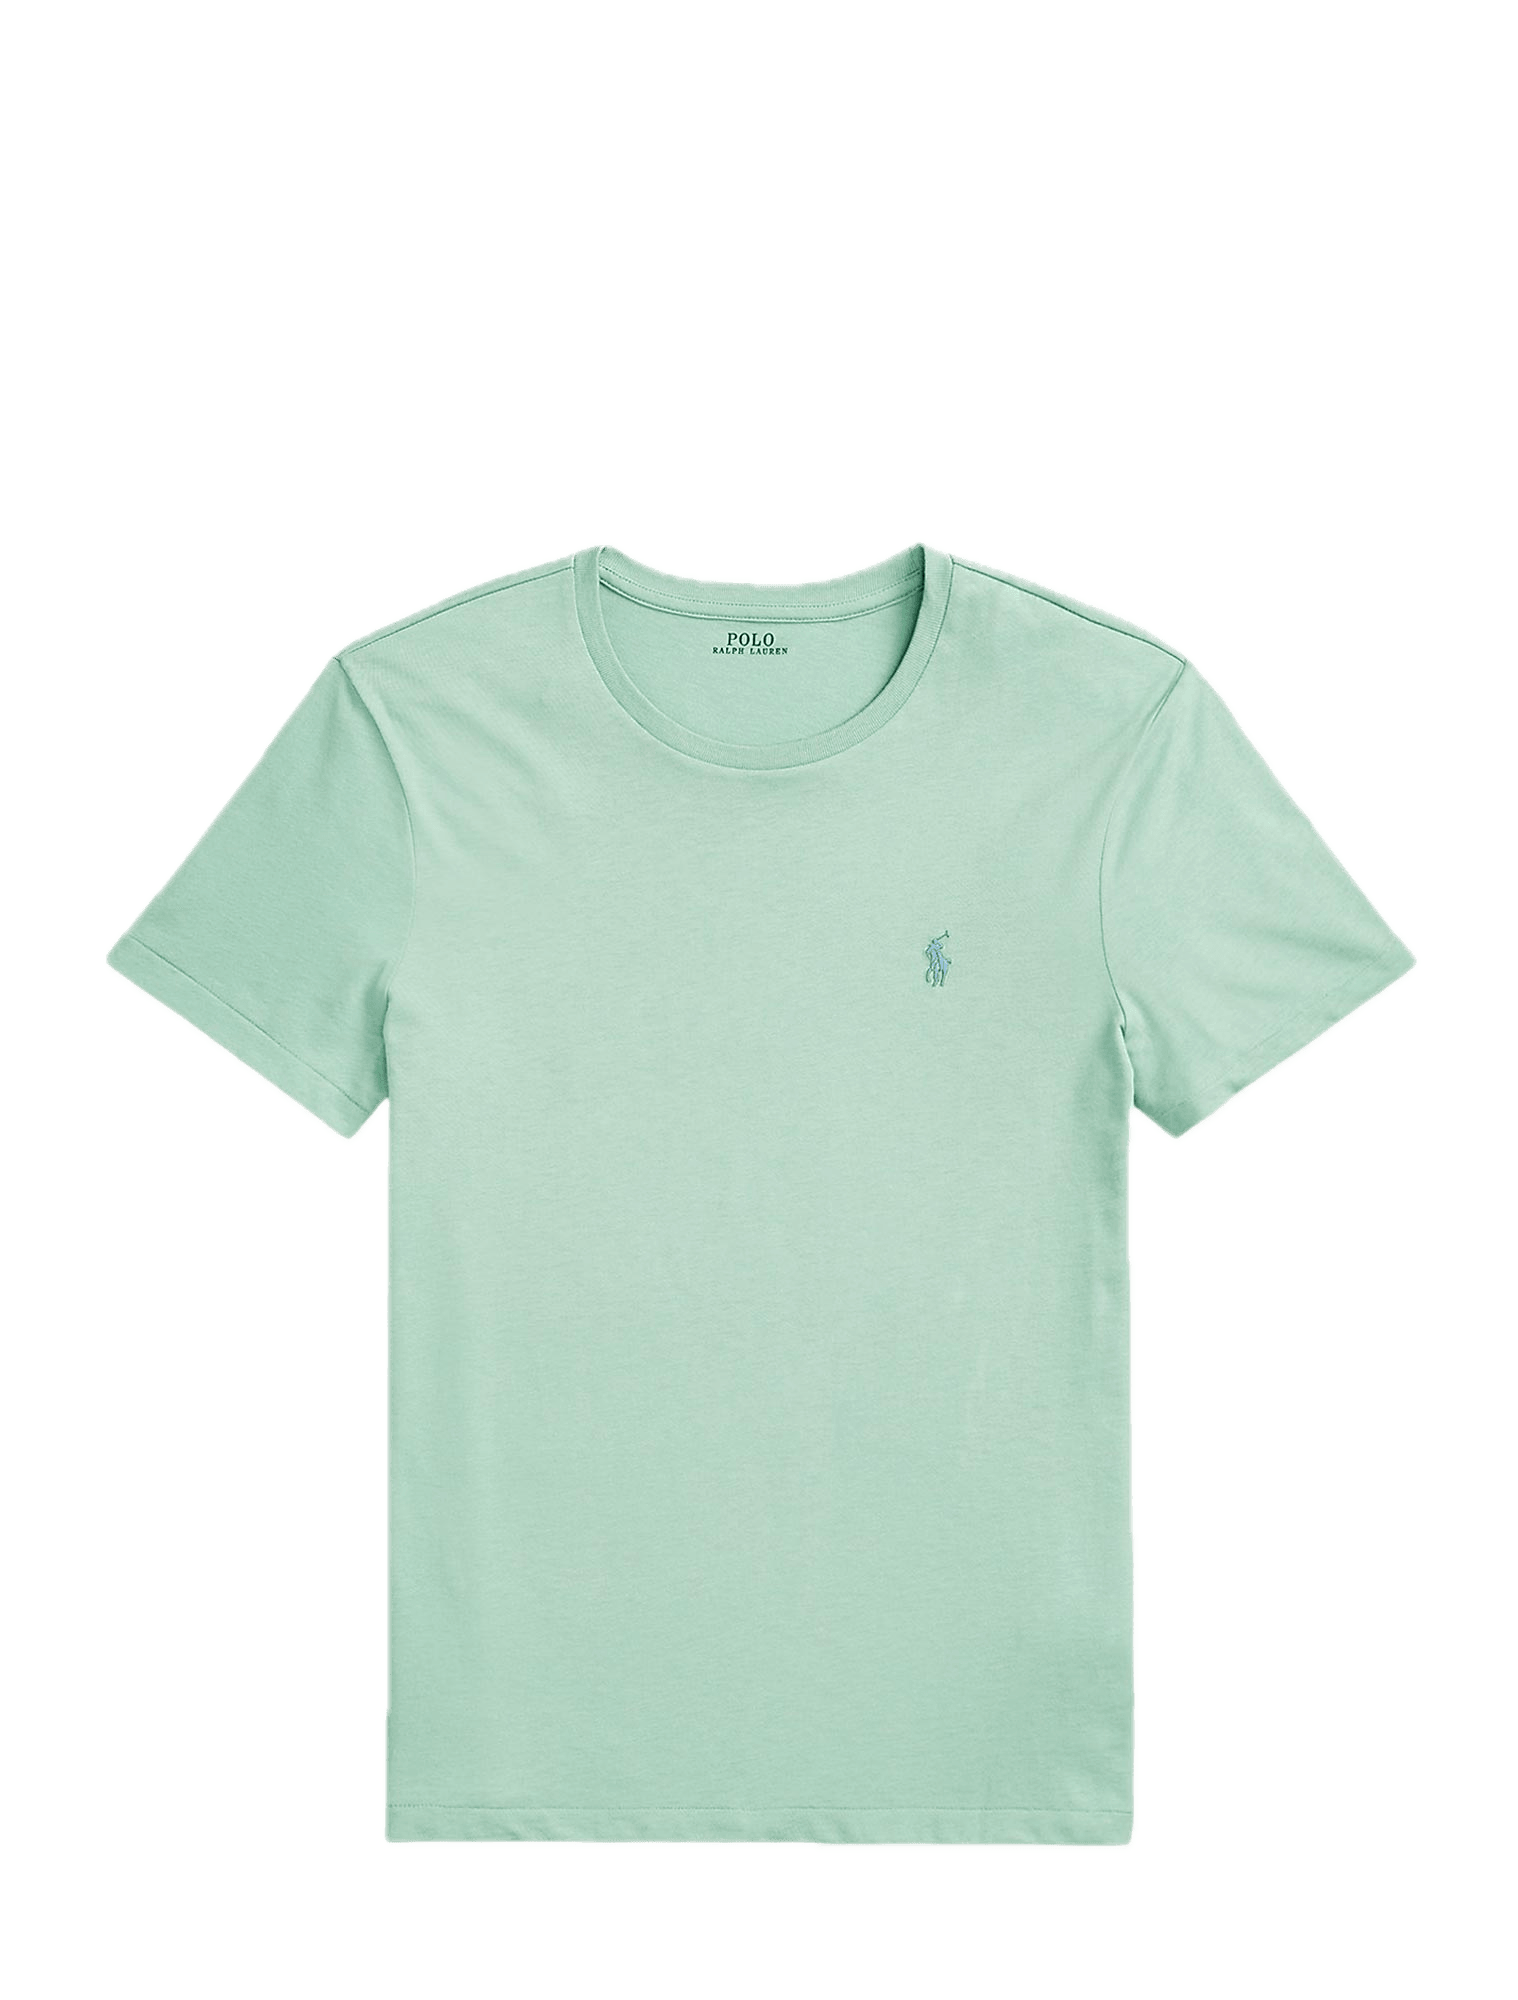 Camiseta Polo Ralph Lauren Verde Celadon de Punto Custom Slim Fit - ECRU